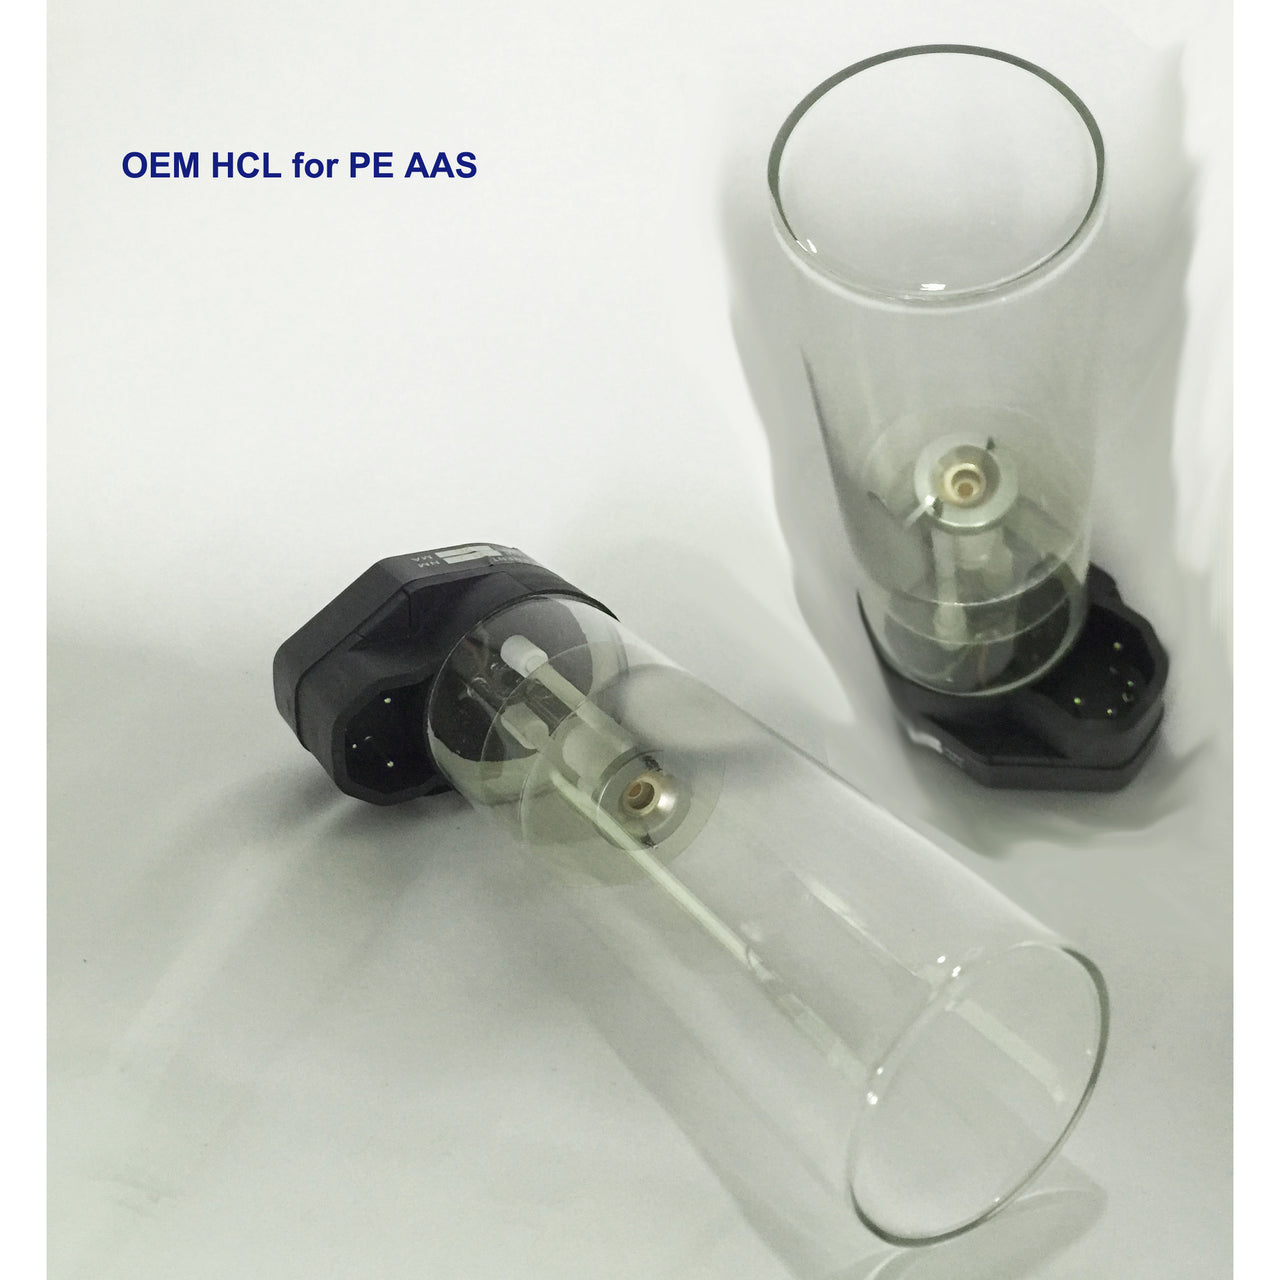 Hollow Cathode Lamp, Cerium - Ce